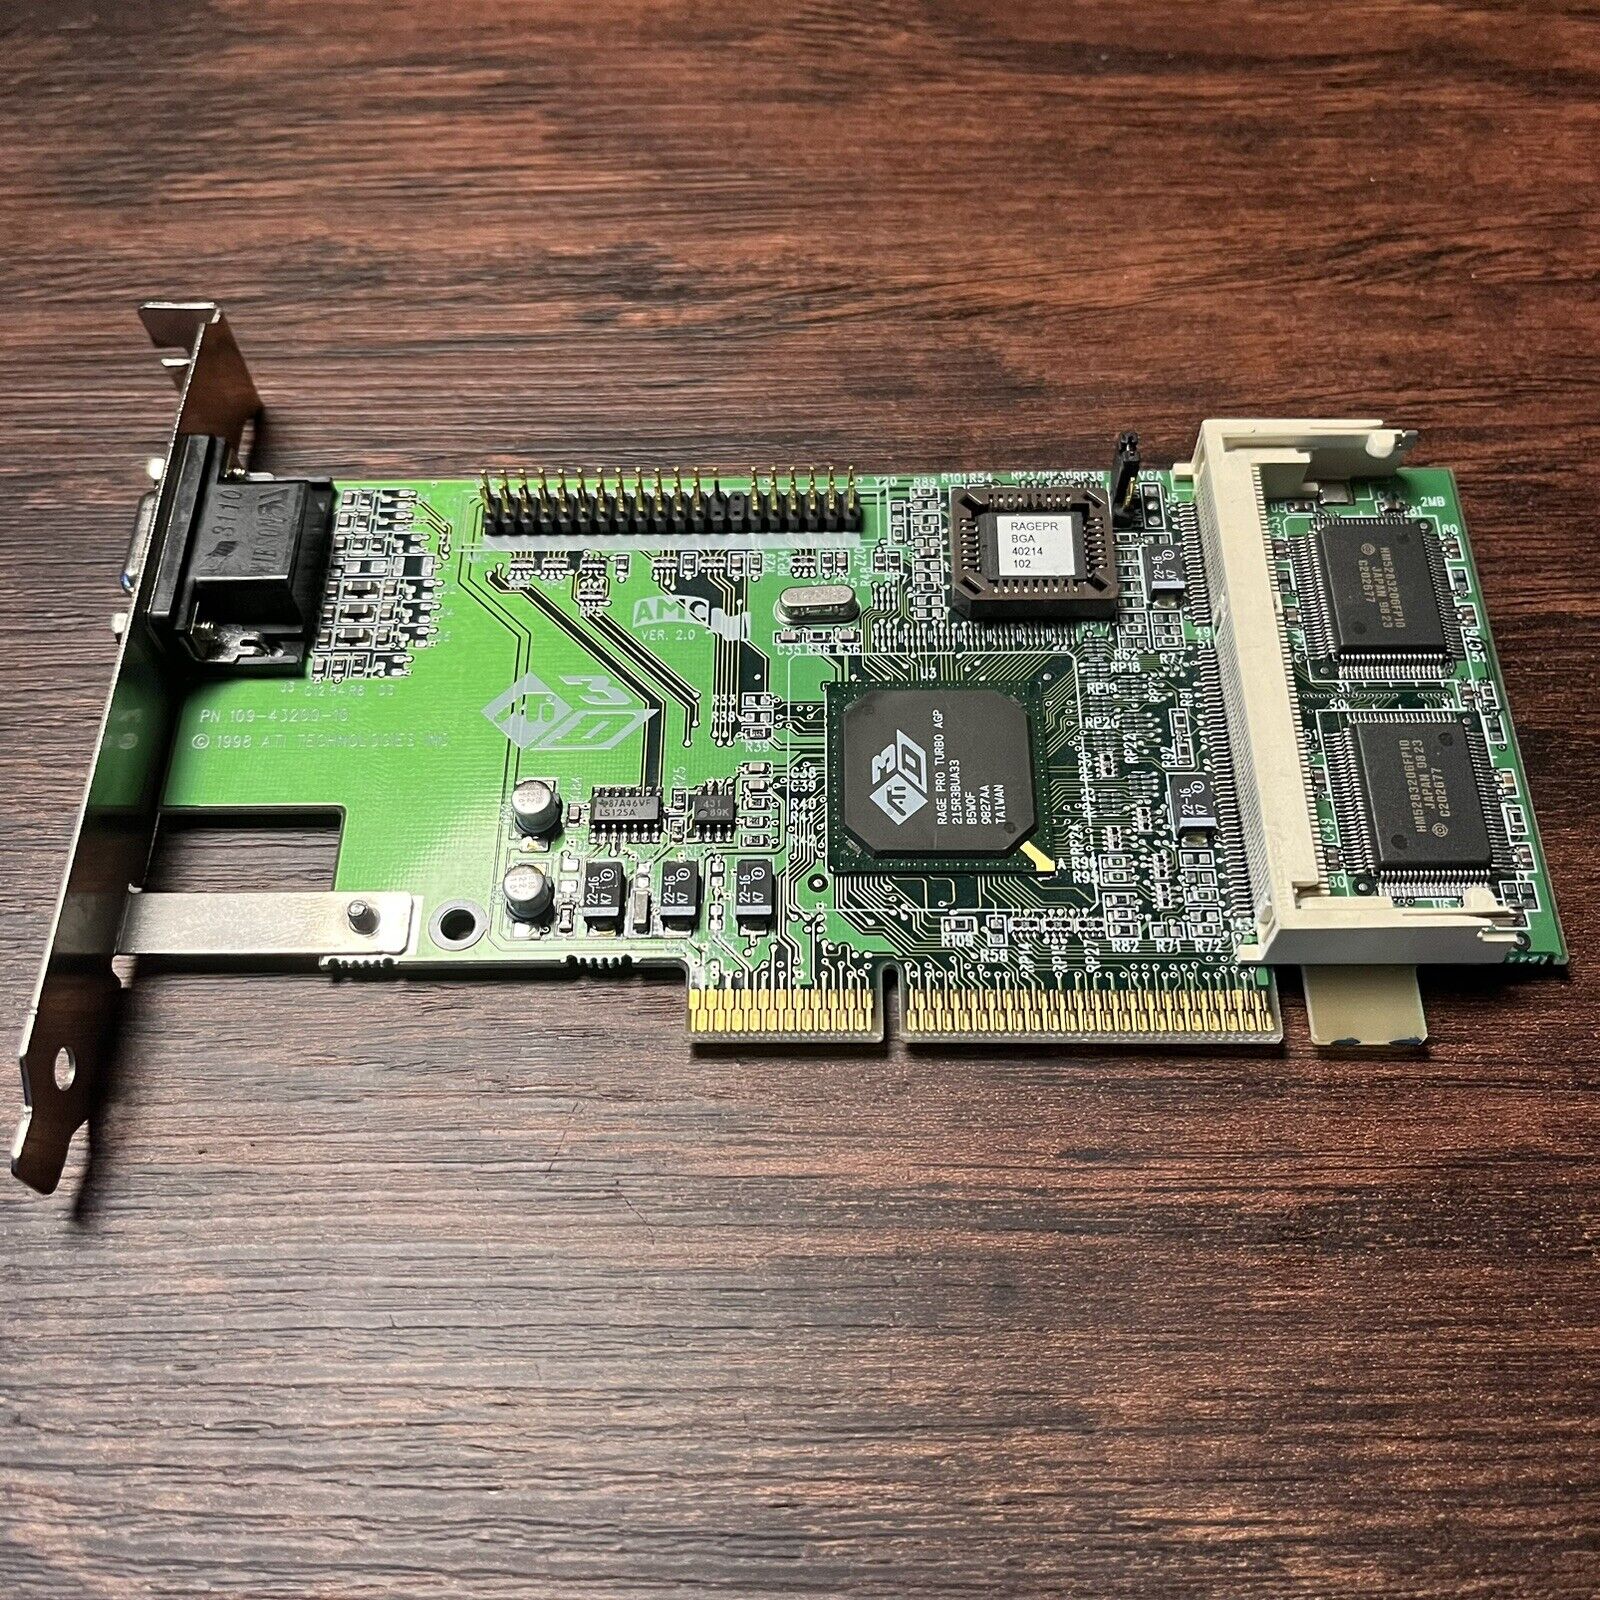 ATI 3D Rage Pro Turbo 4MB AGP Video Card AGP 1.0 For DOS/95/98/ME